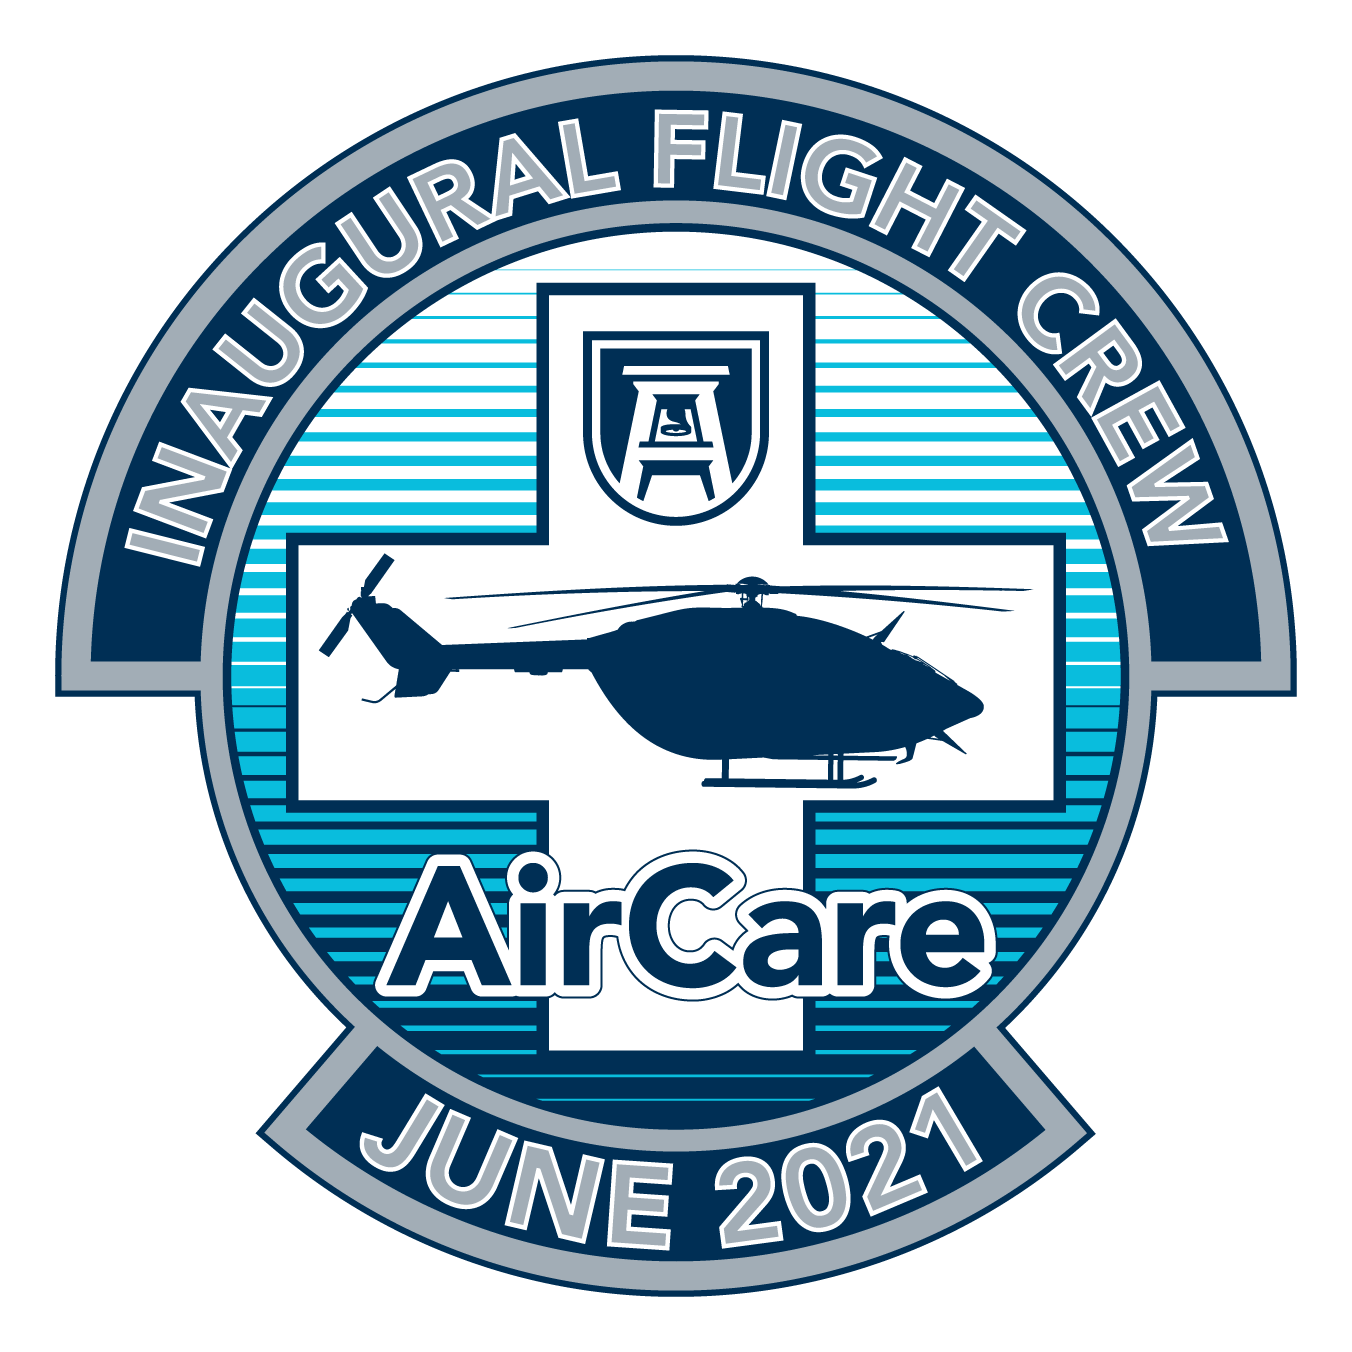 Inaugural flight crew badge